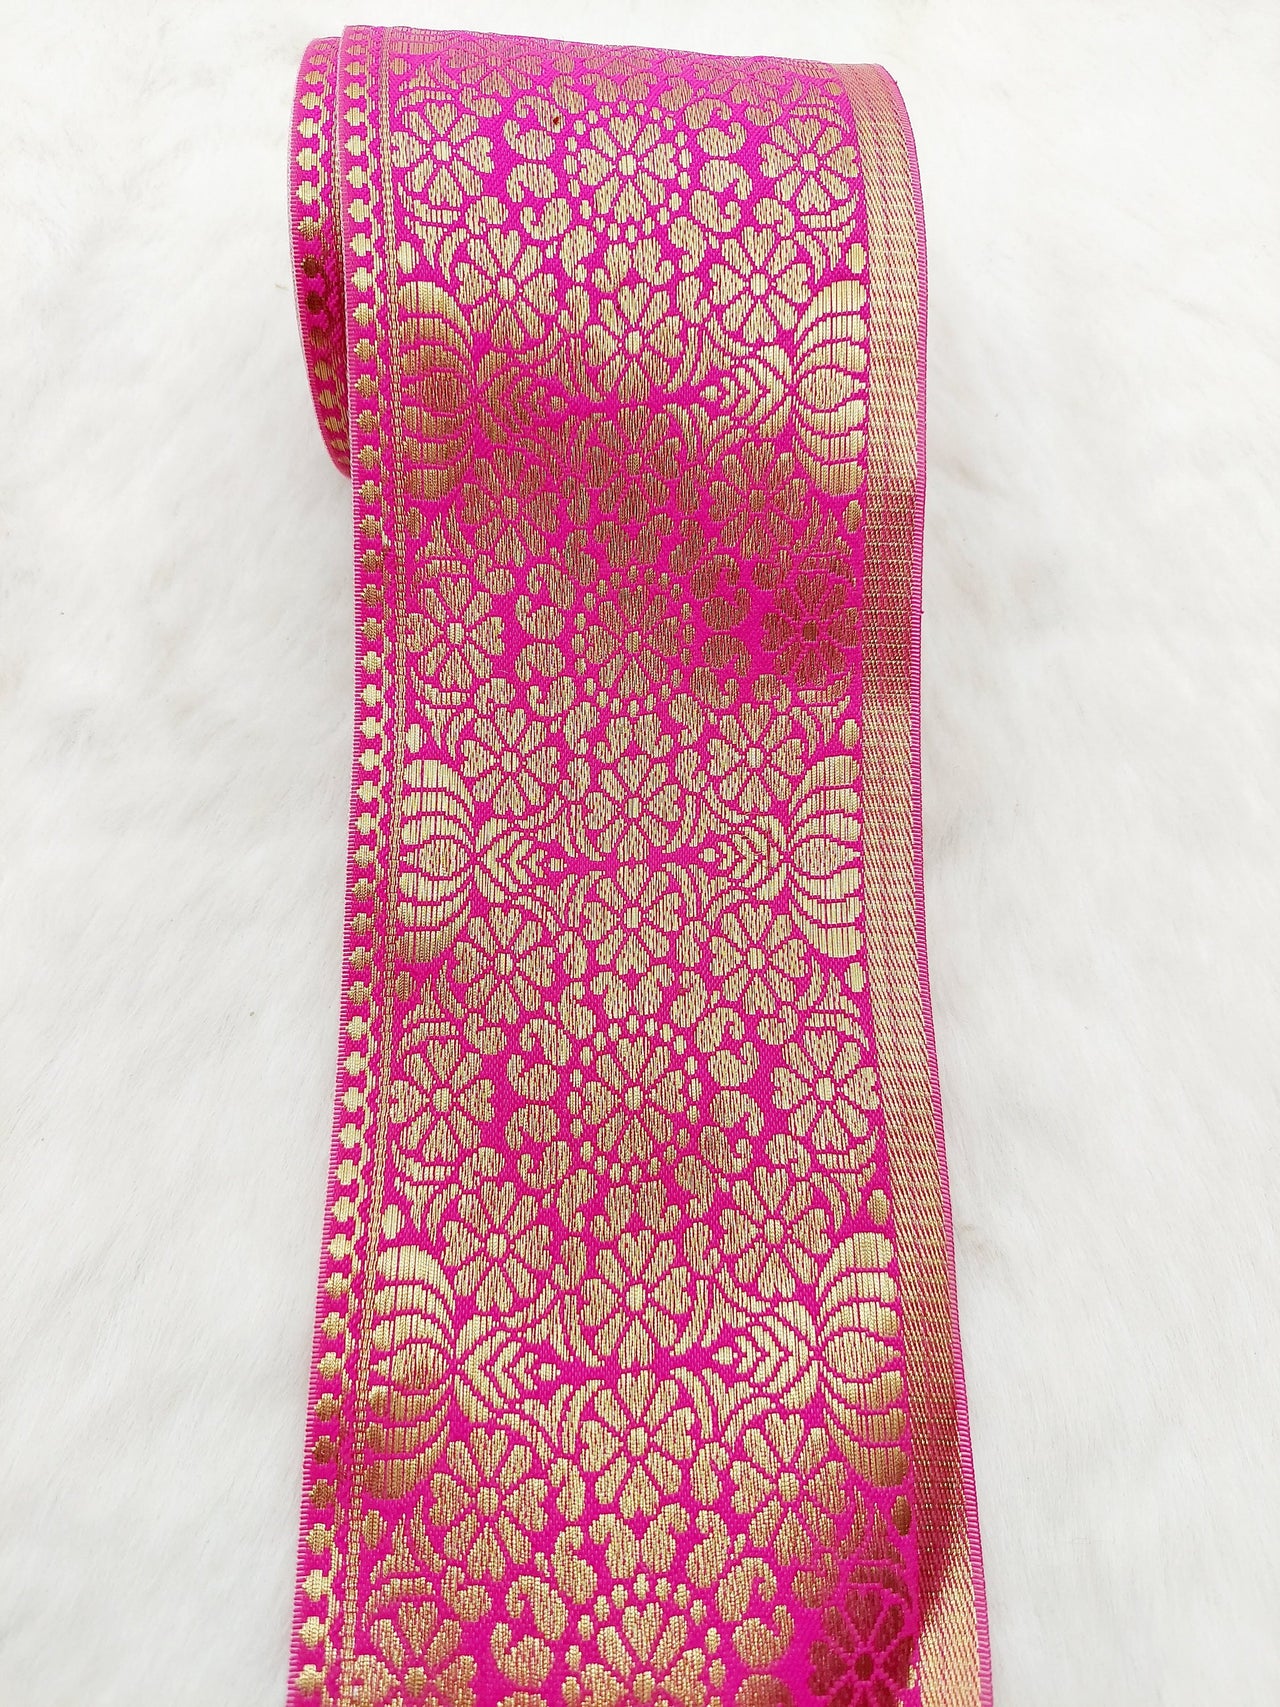 Jacquard Saree Border, Fuchsia Pink And Gold Woven Thread Work Trim, Jacquard Trimming Decorative Trim